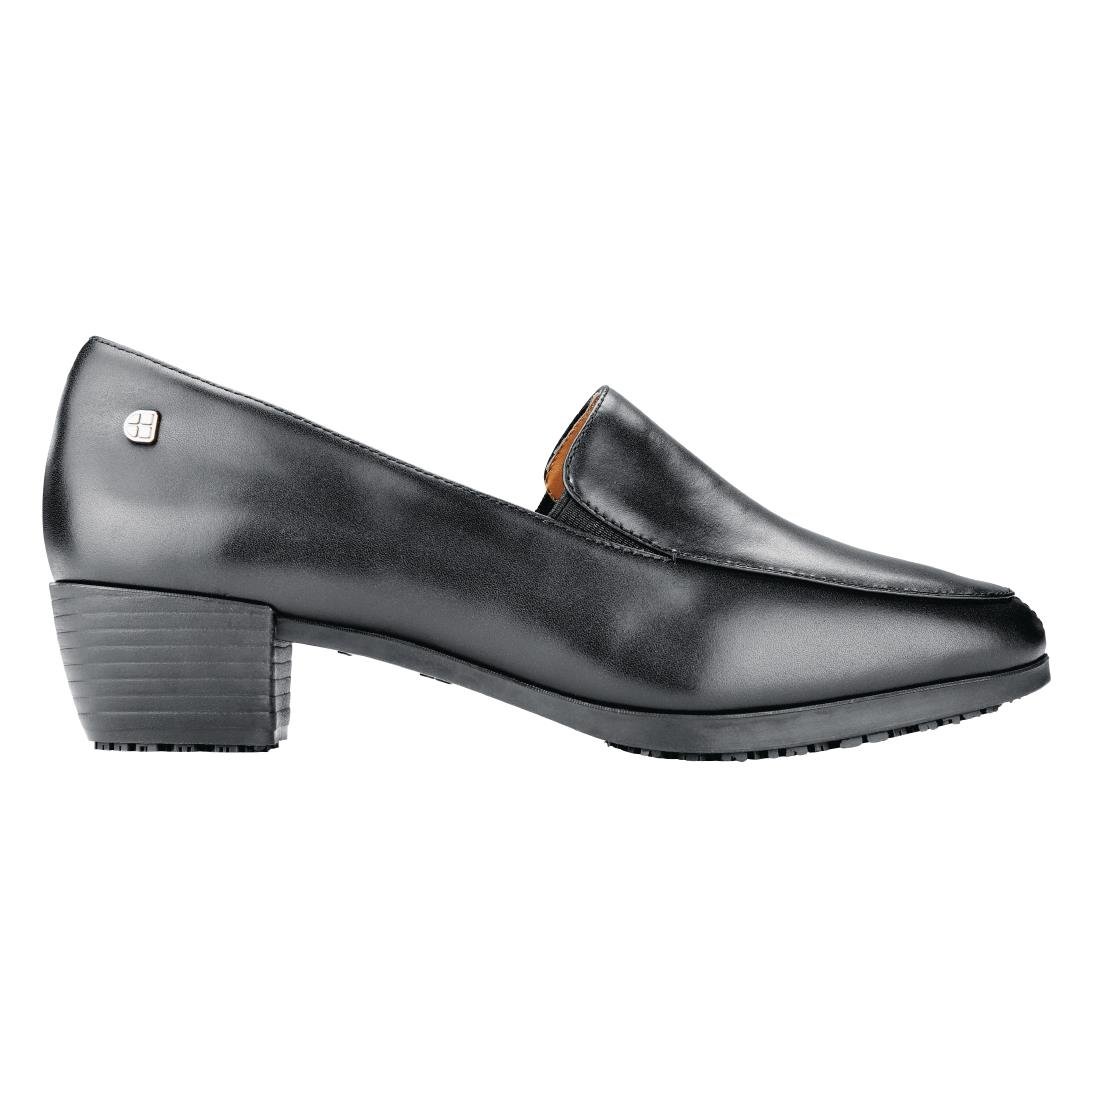 BB605-41 Shoes for Crews Envy Slip On Dress Shoe Black Size 41